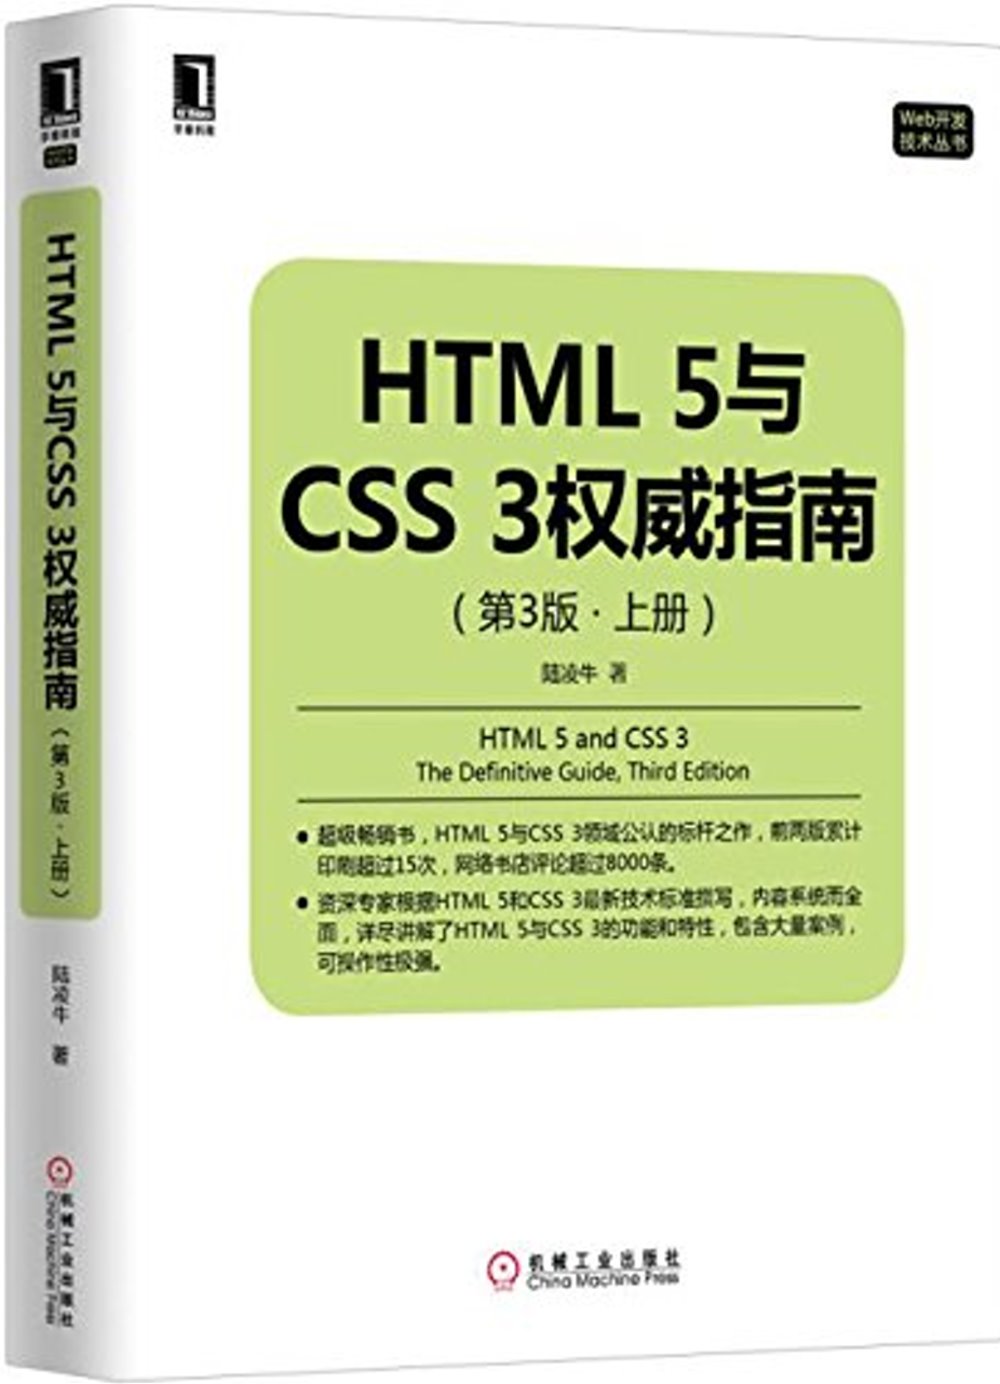 HTML5與CSS3權威指南(第3版·上冊)